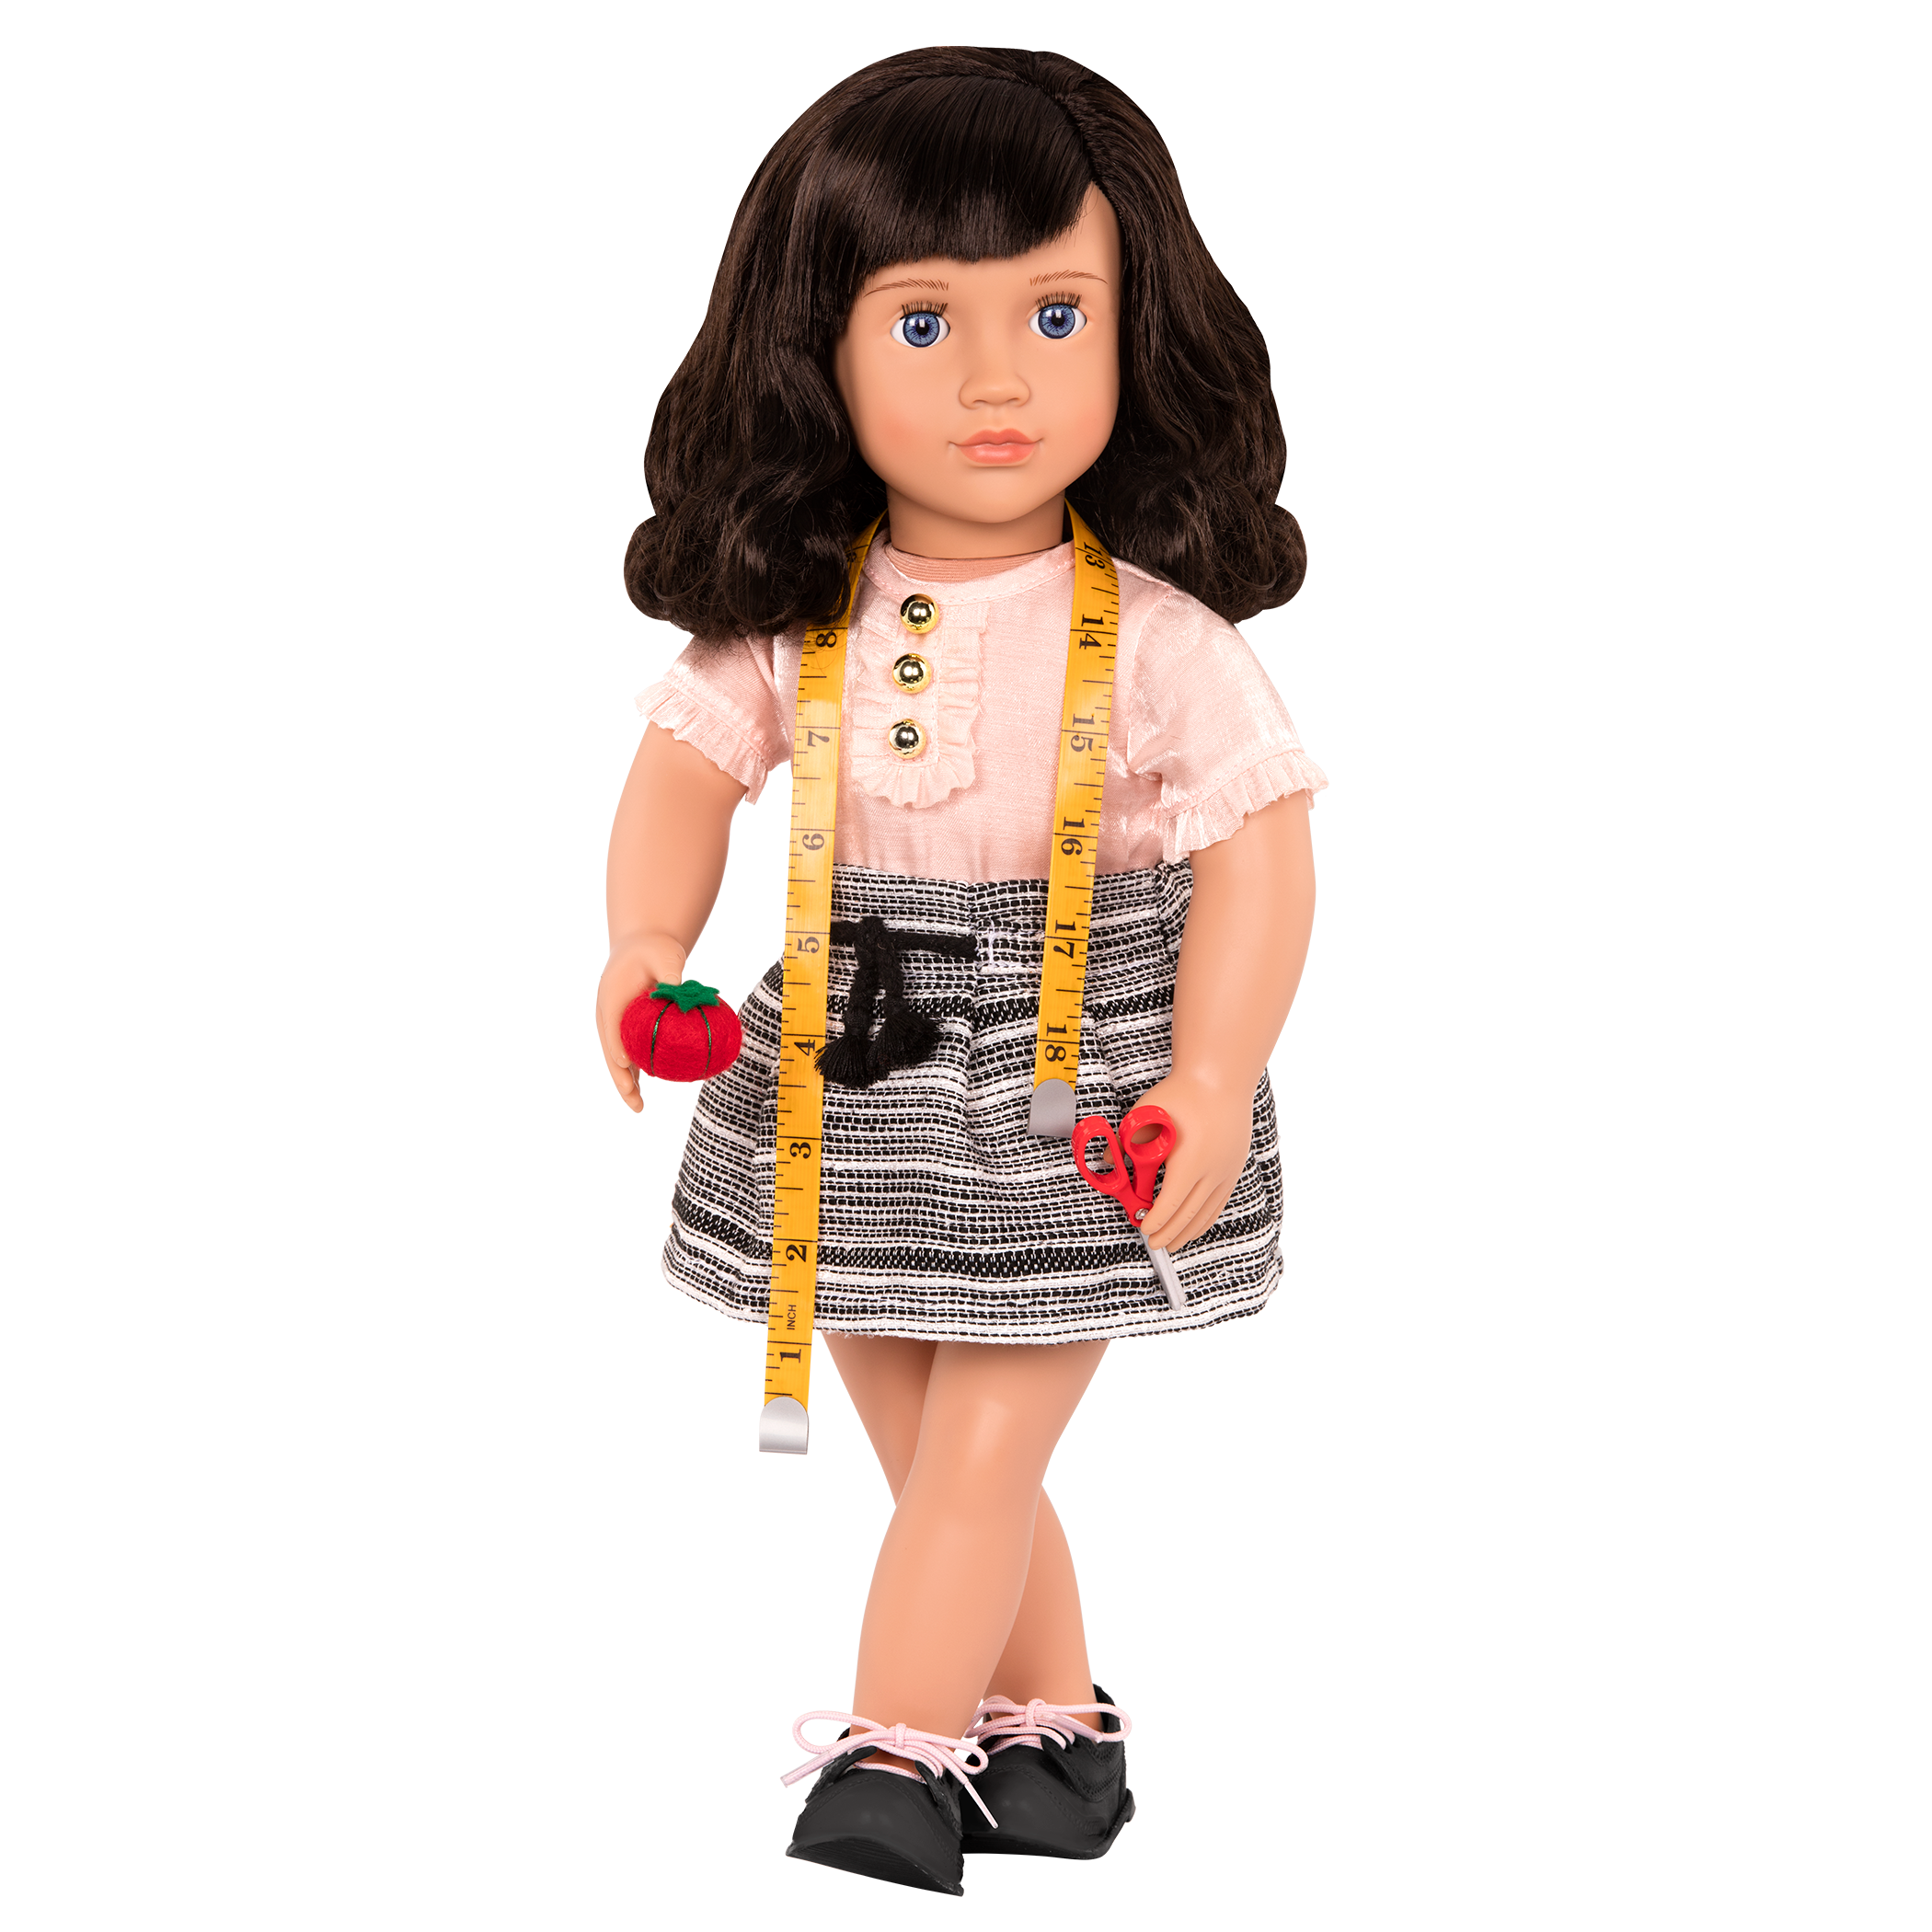 18-inch fashion designer doll with dark-brown hair, blue eyes and designing accessories